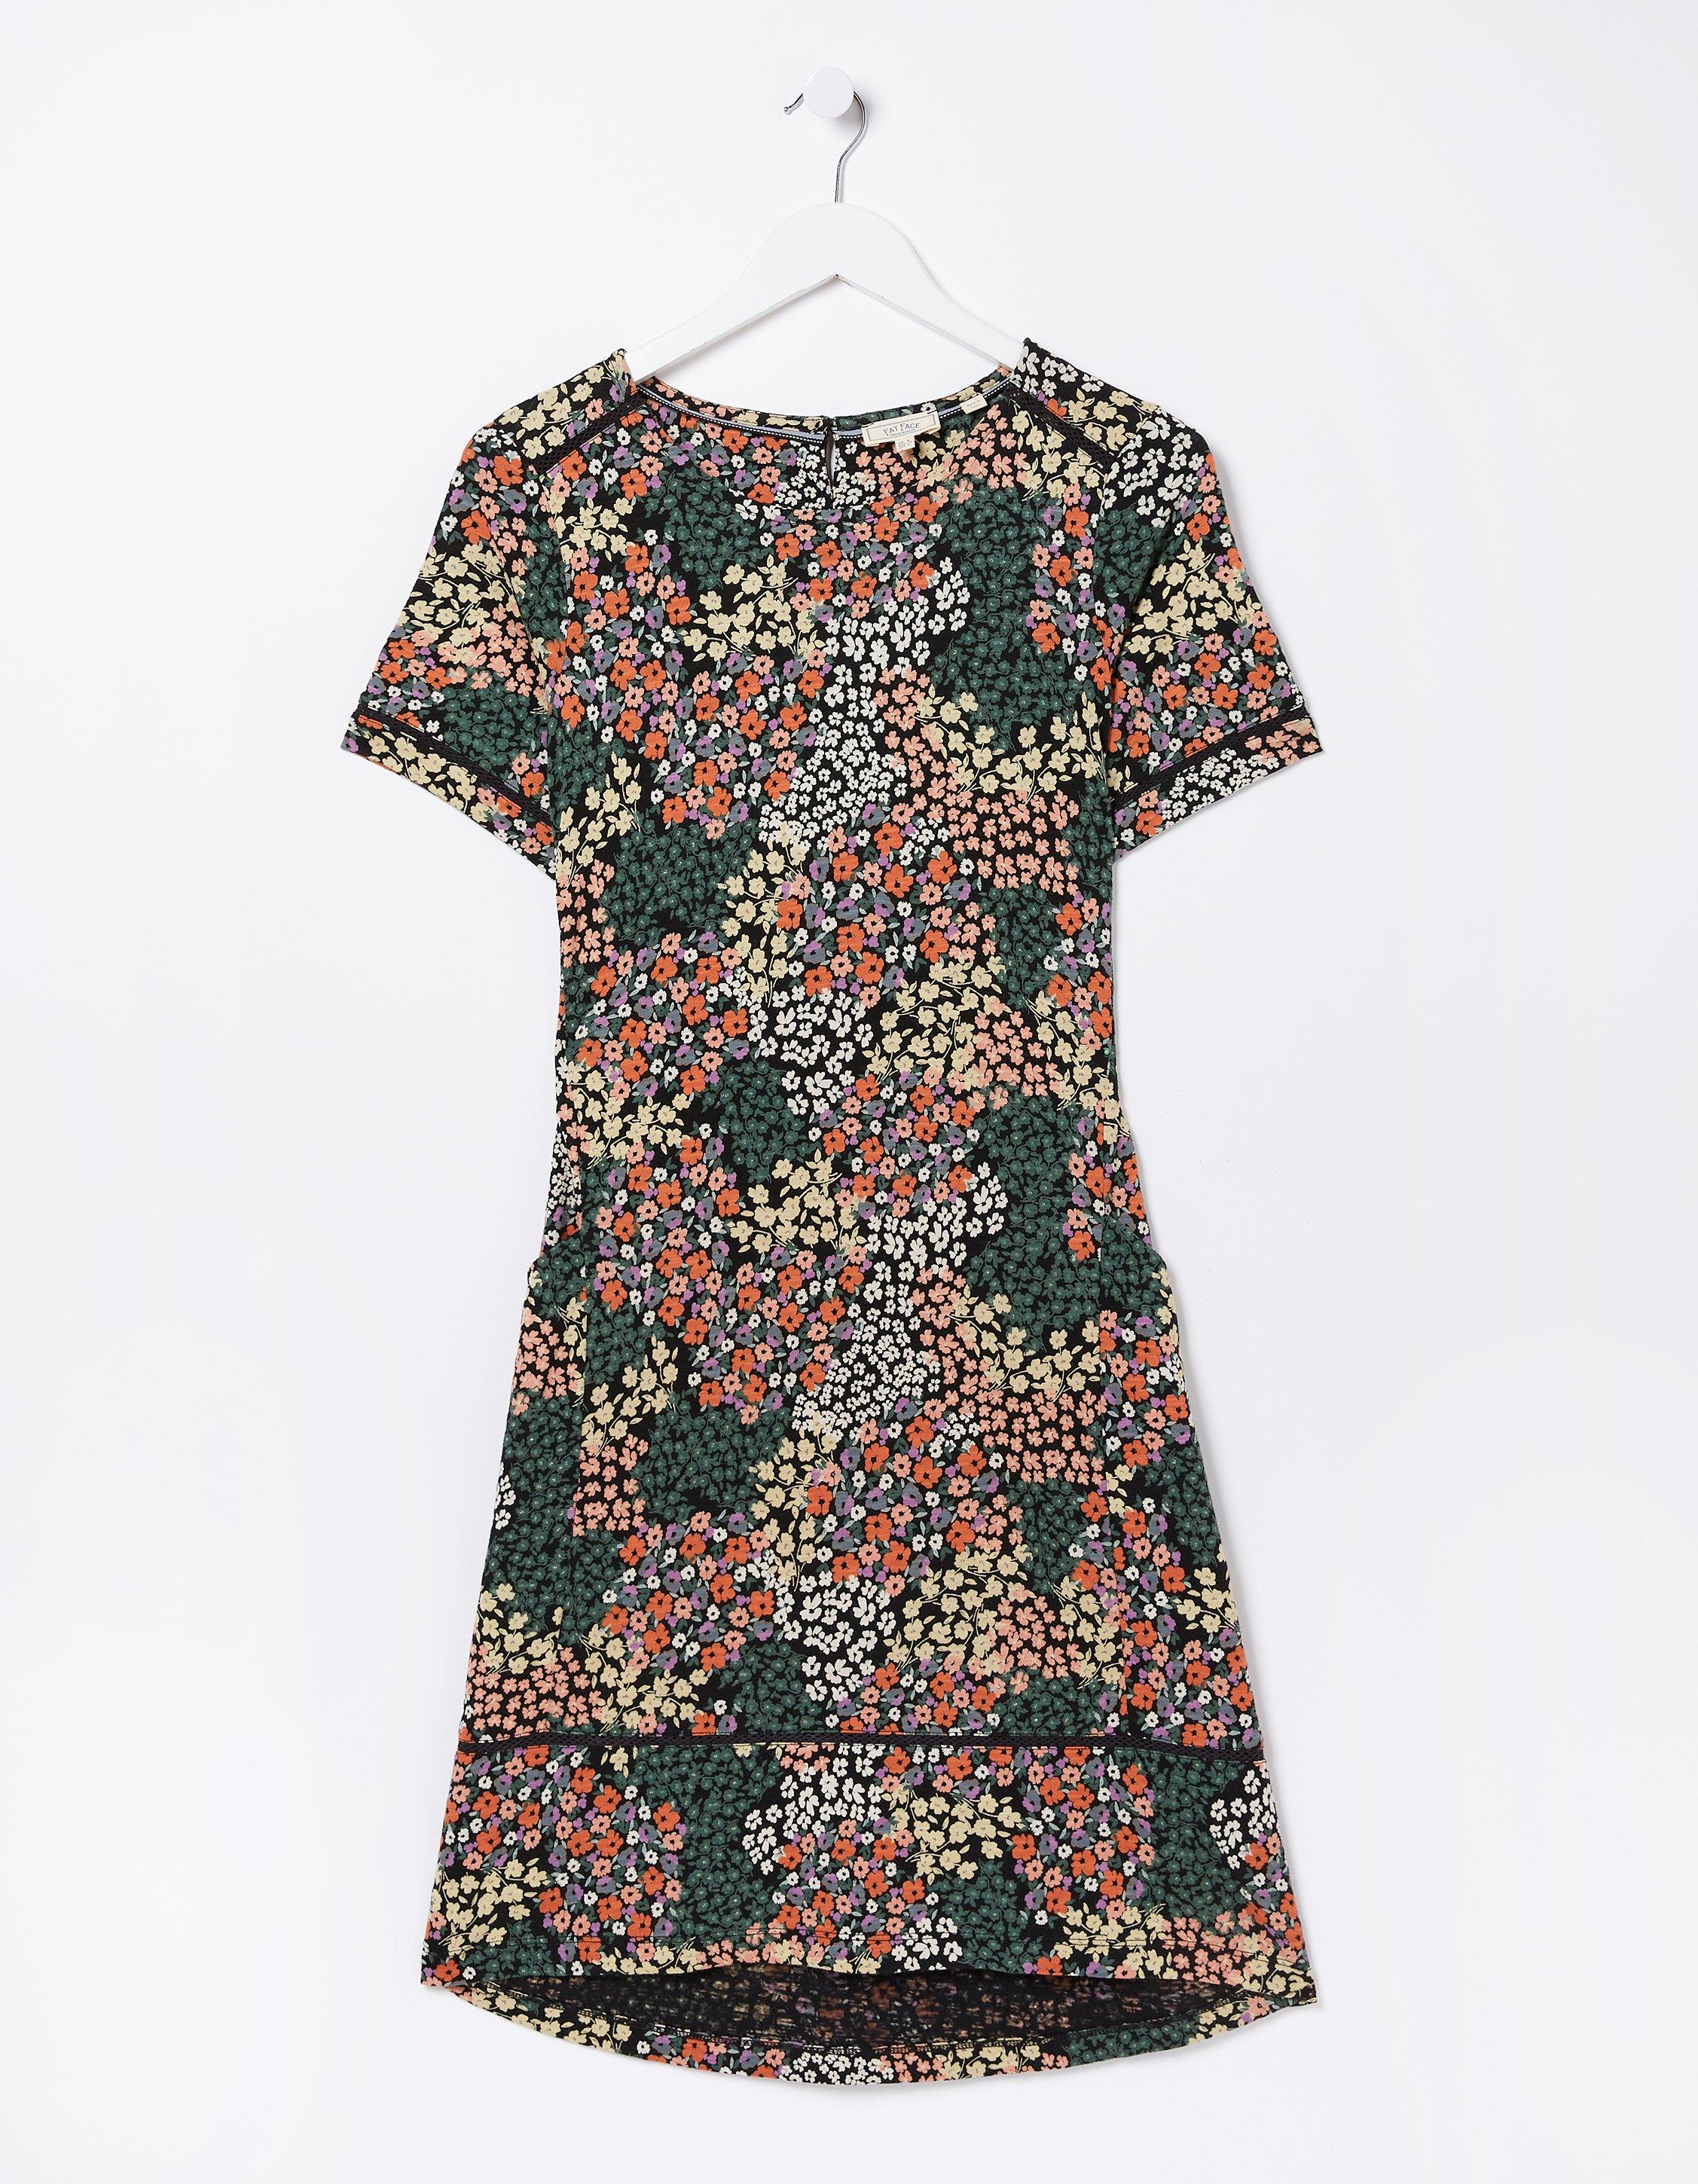 Simone Patchwork Floral Jersey Dress